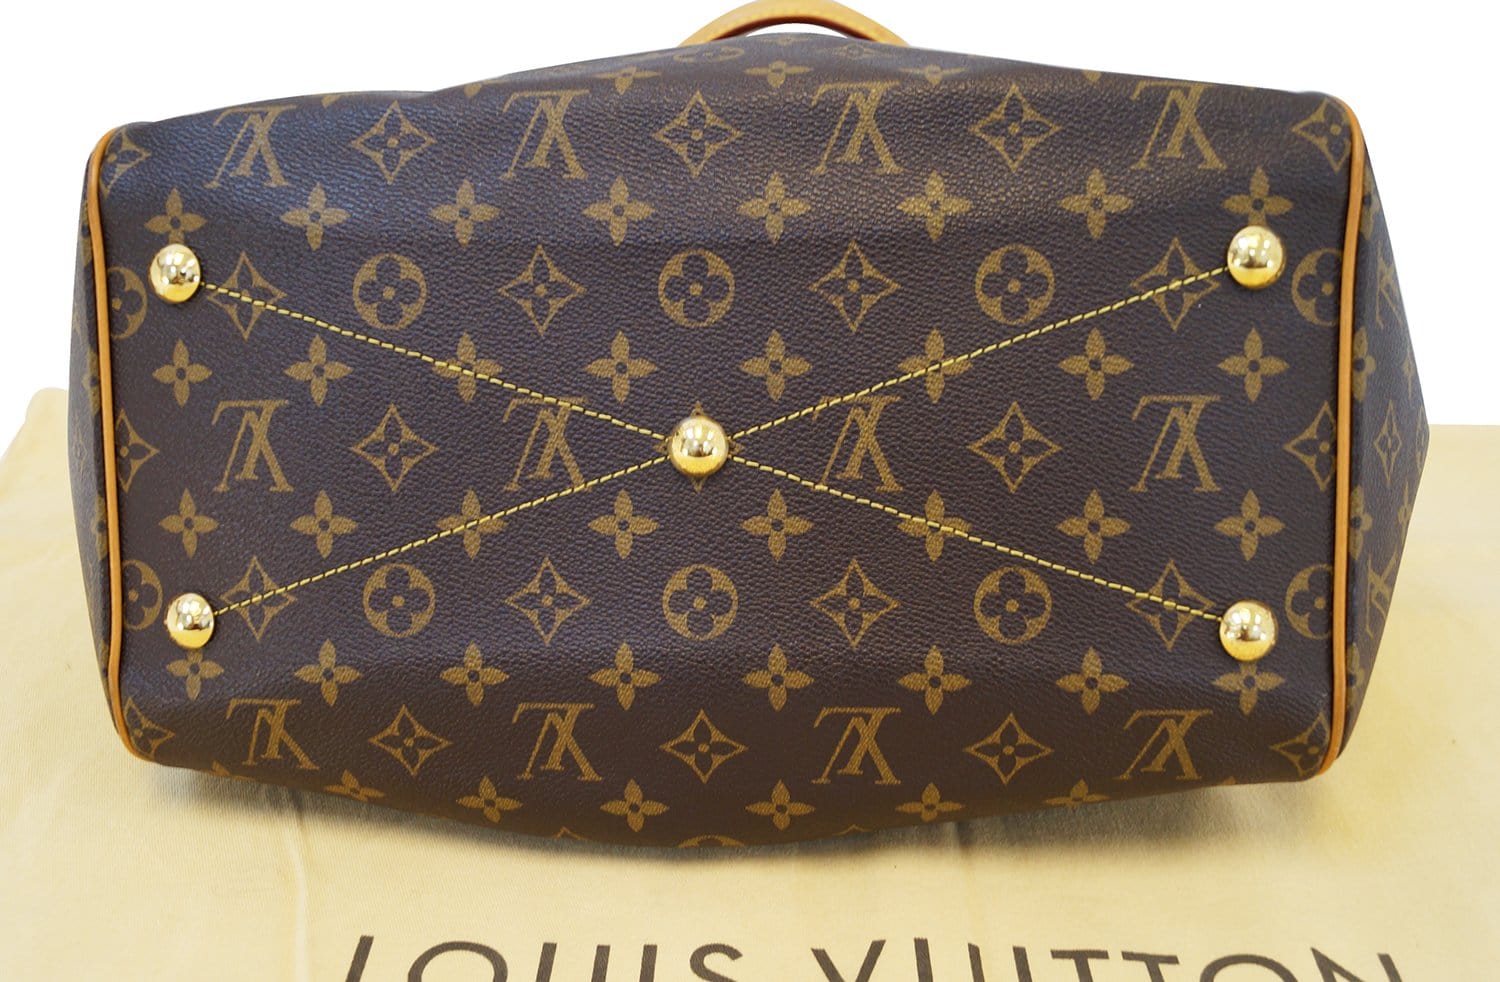 Louis Vuitton Size Large Monogram LV Monogram Tivoli GM – Worth The Wait